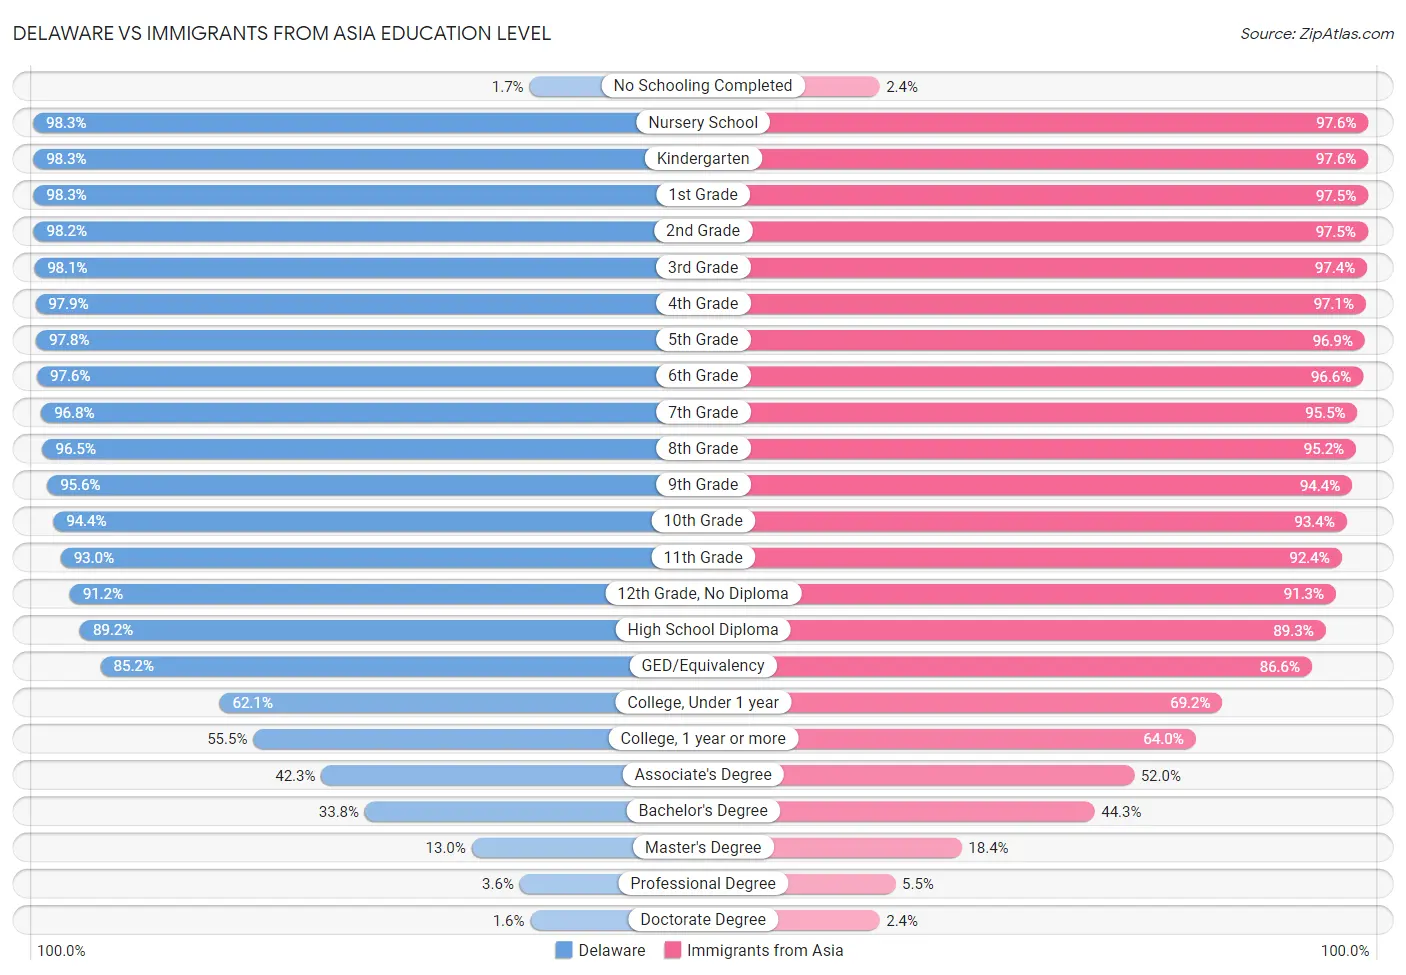 Delaware vs Immigrants from Asia Education Level